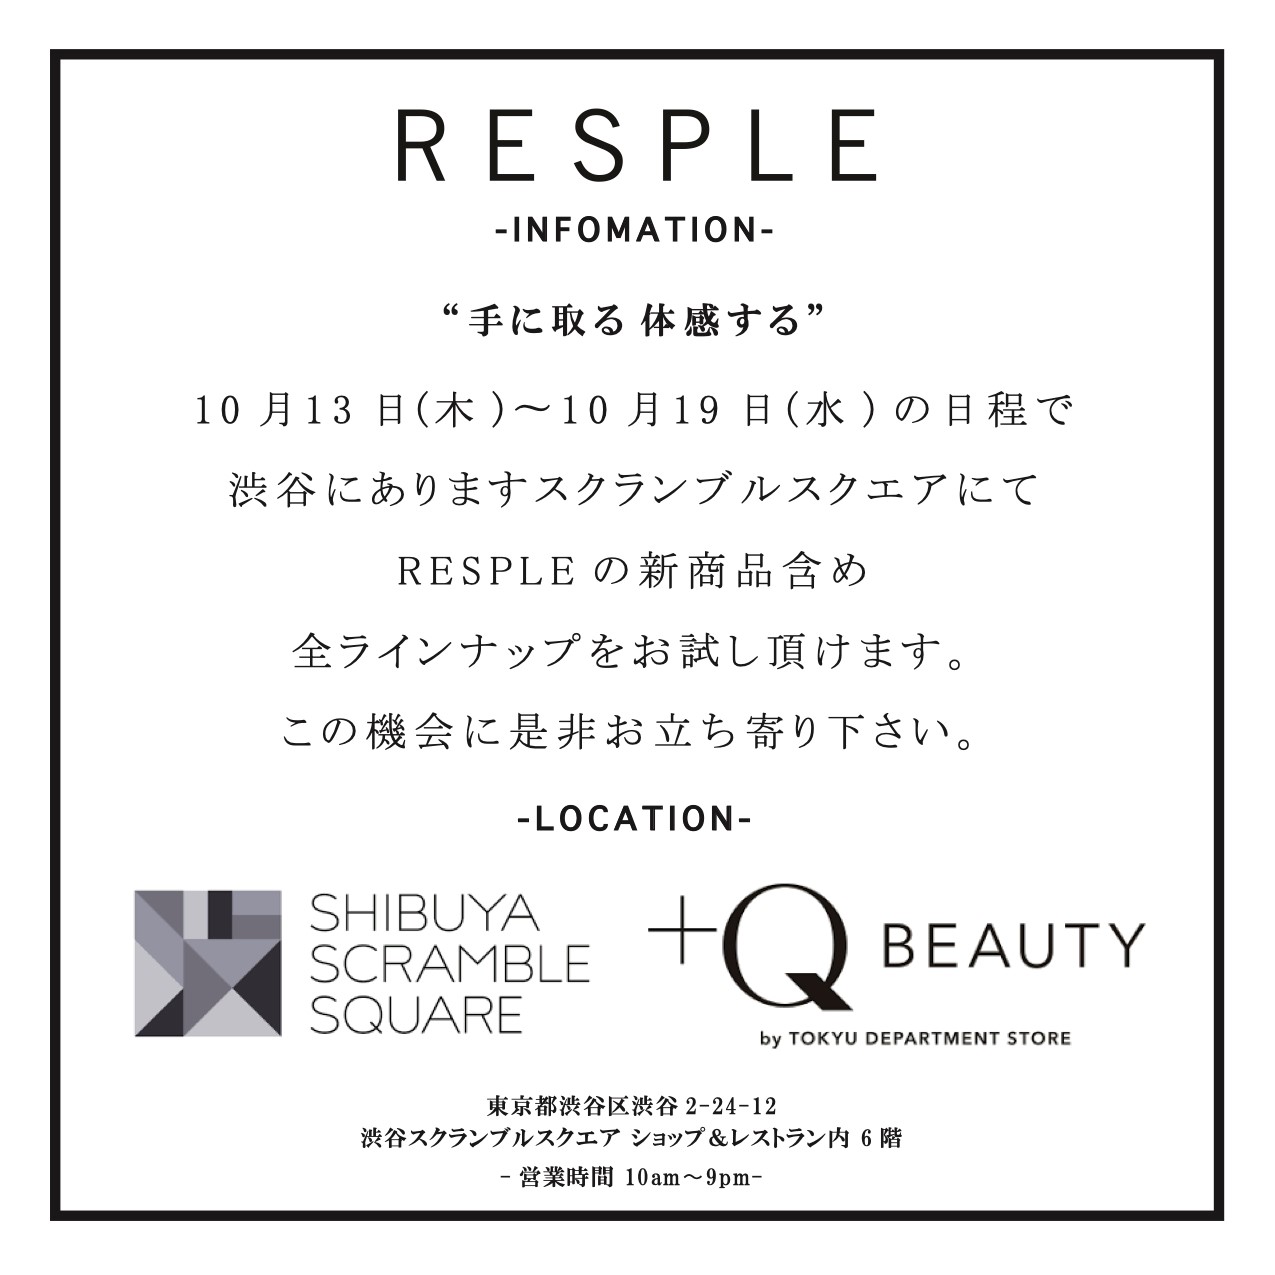 RESPLE organics × 渋谷スクランブルスクエア  POPUP